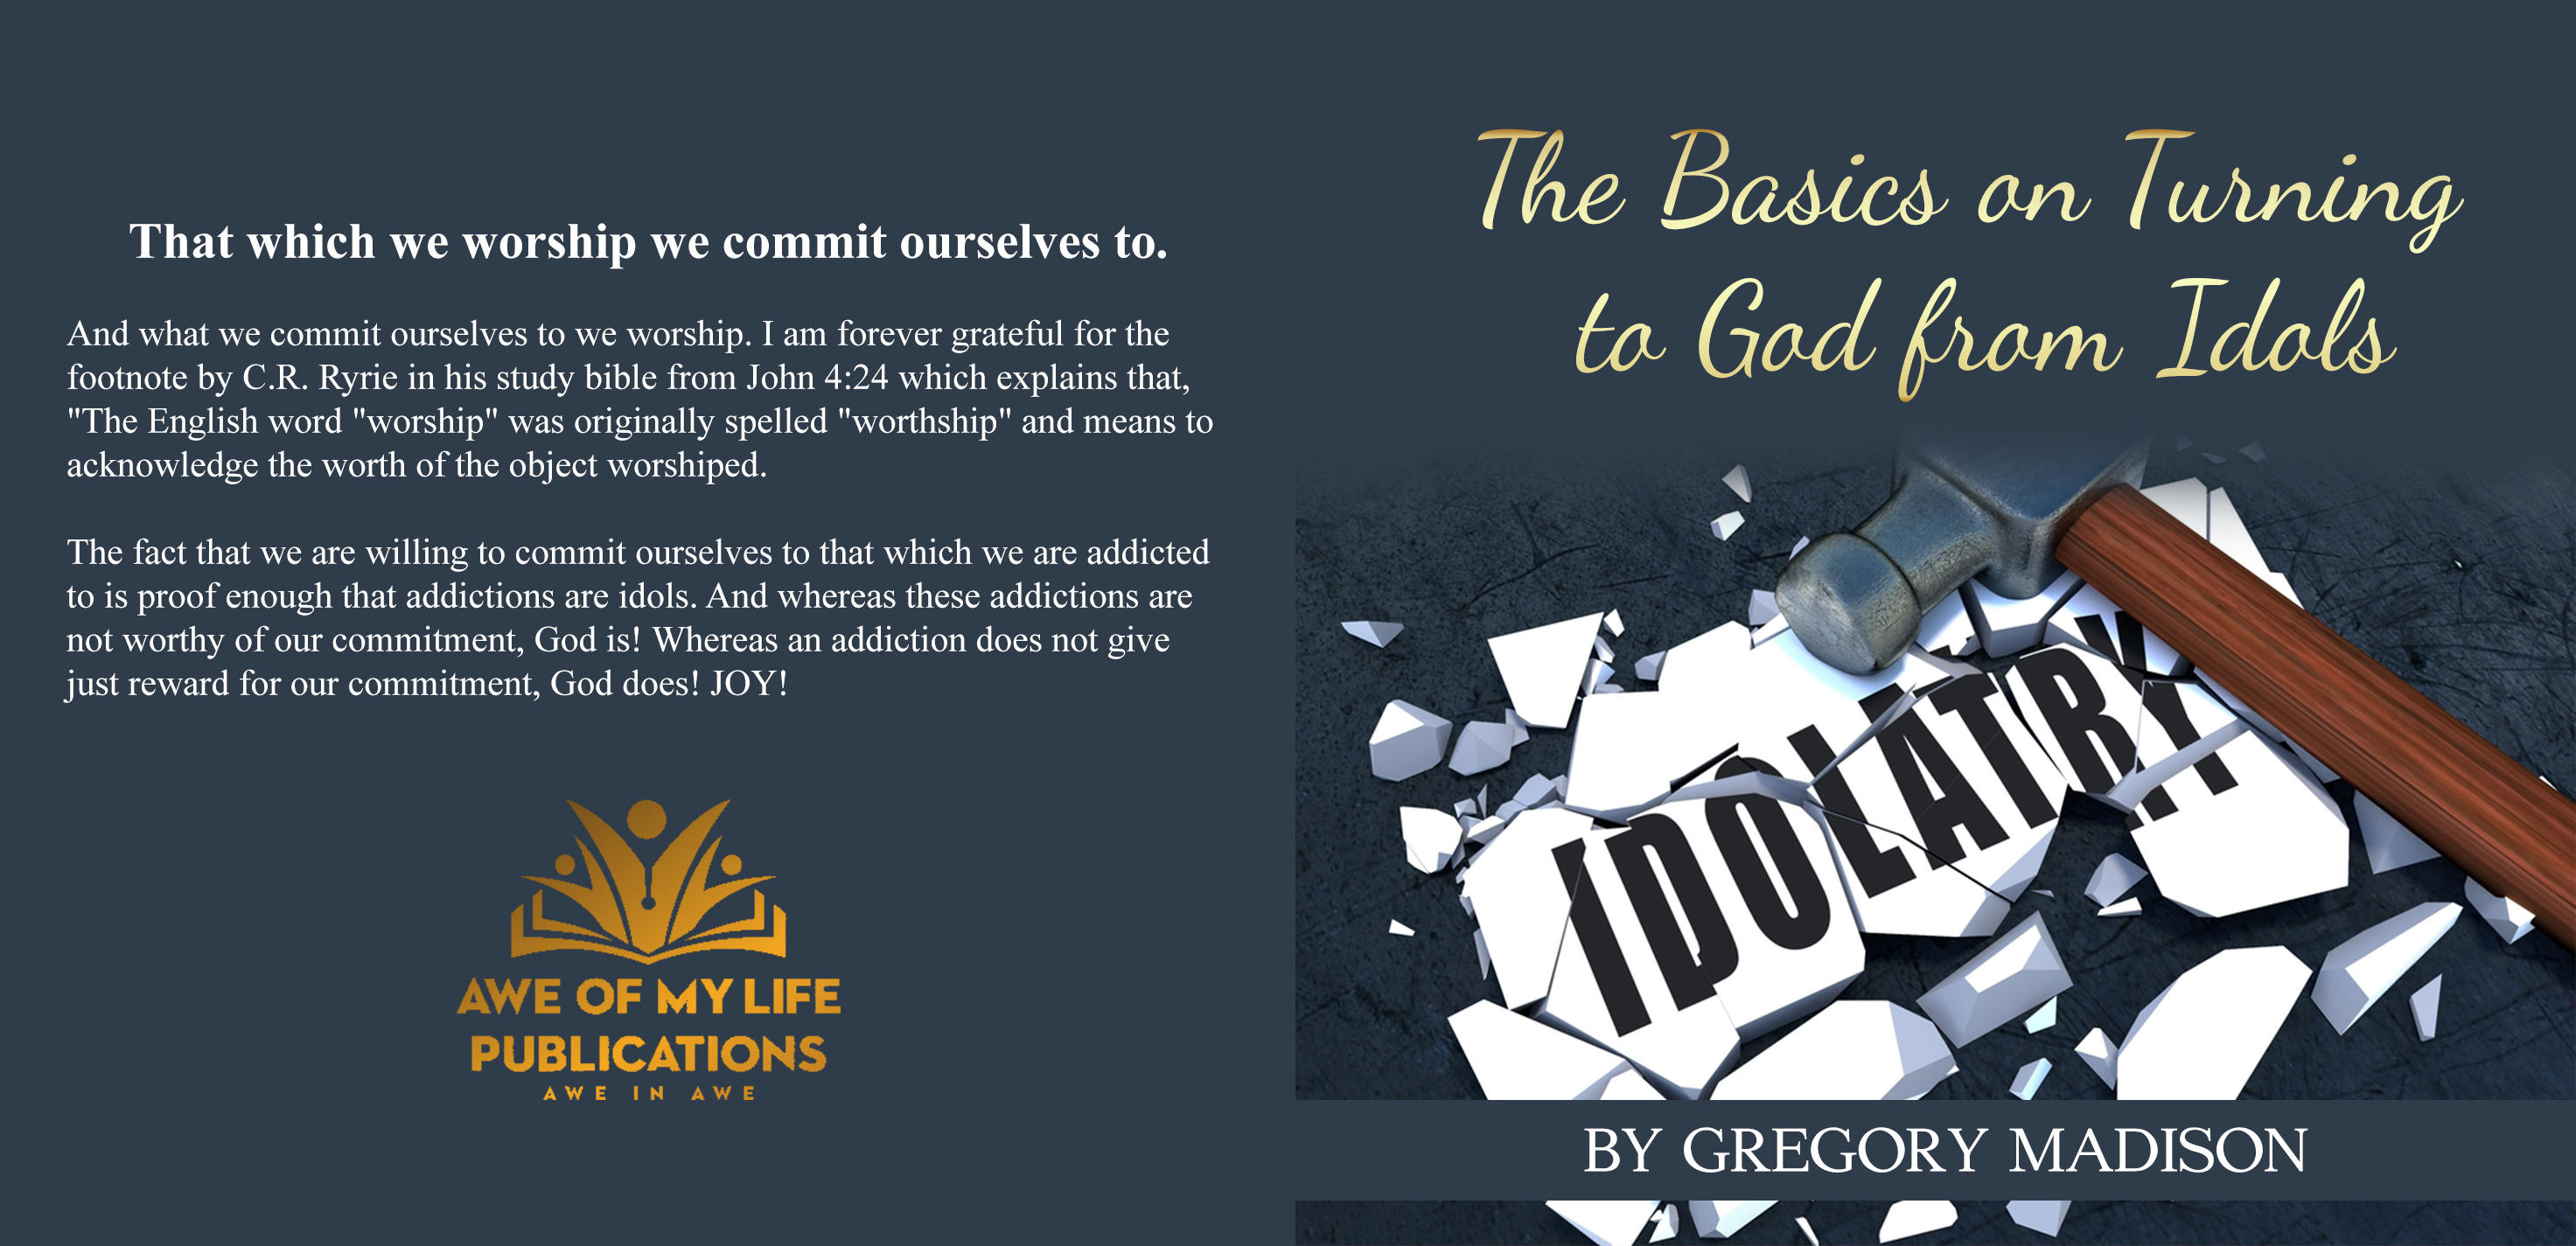 FREE: The Basics on Turning to God from Idols by Gregory Madison